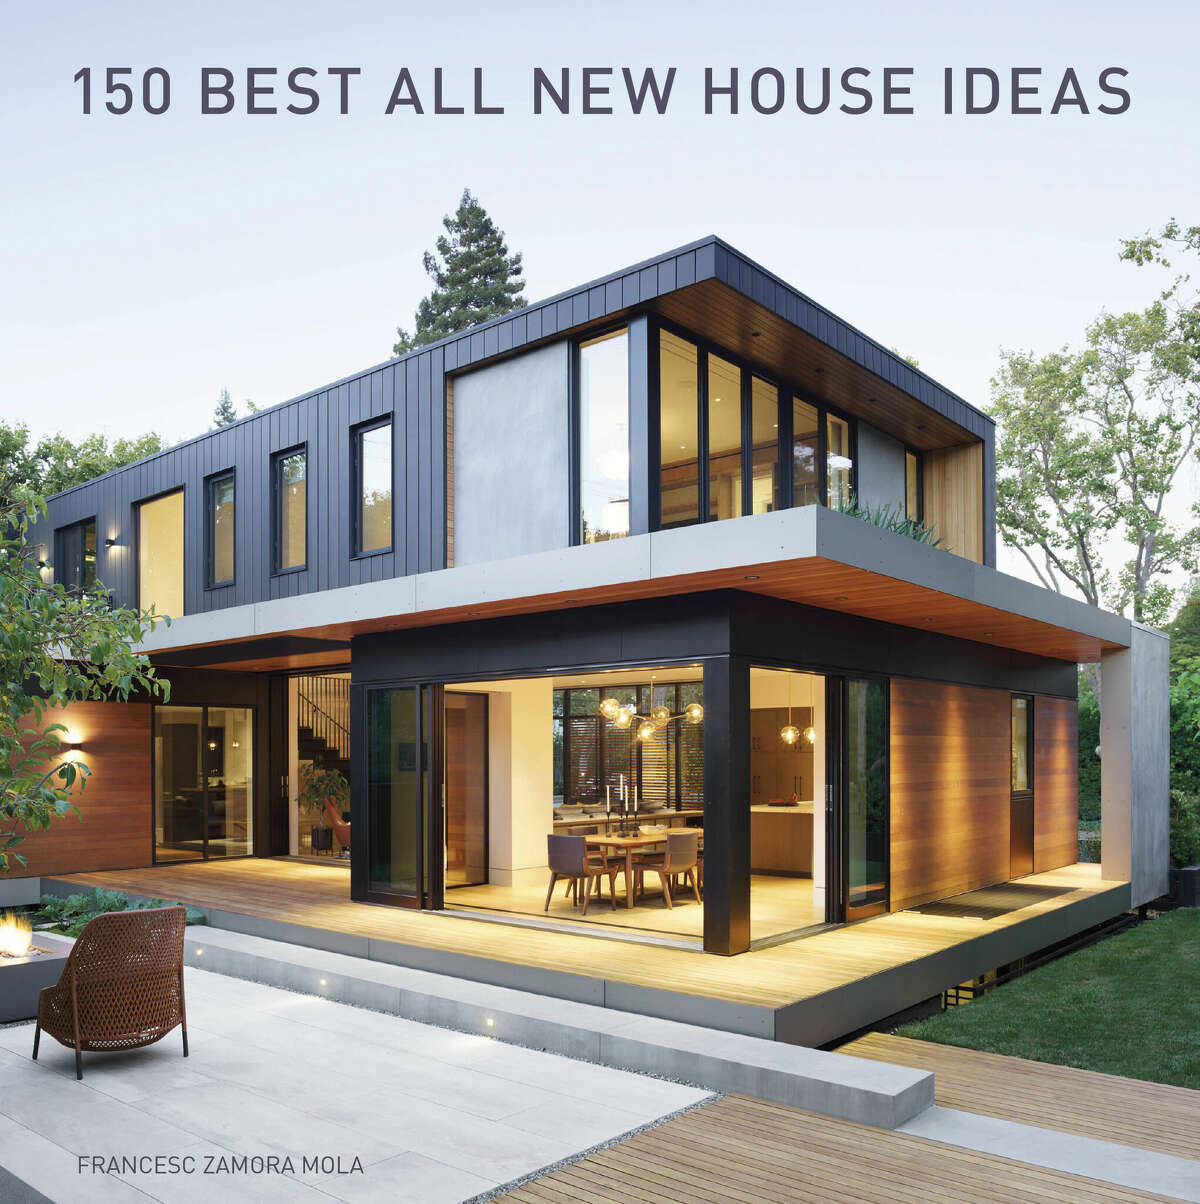 "150 Best All New House Ideas," by Francesc Zamora Mola